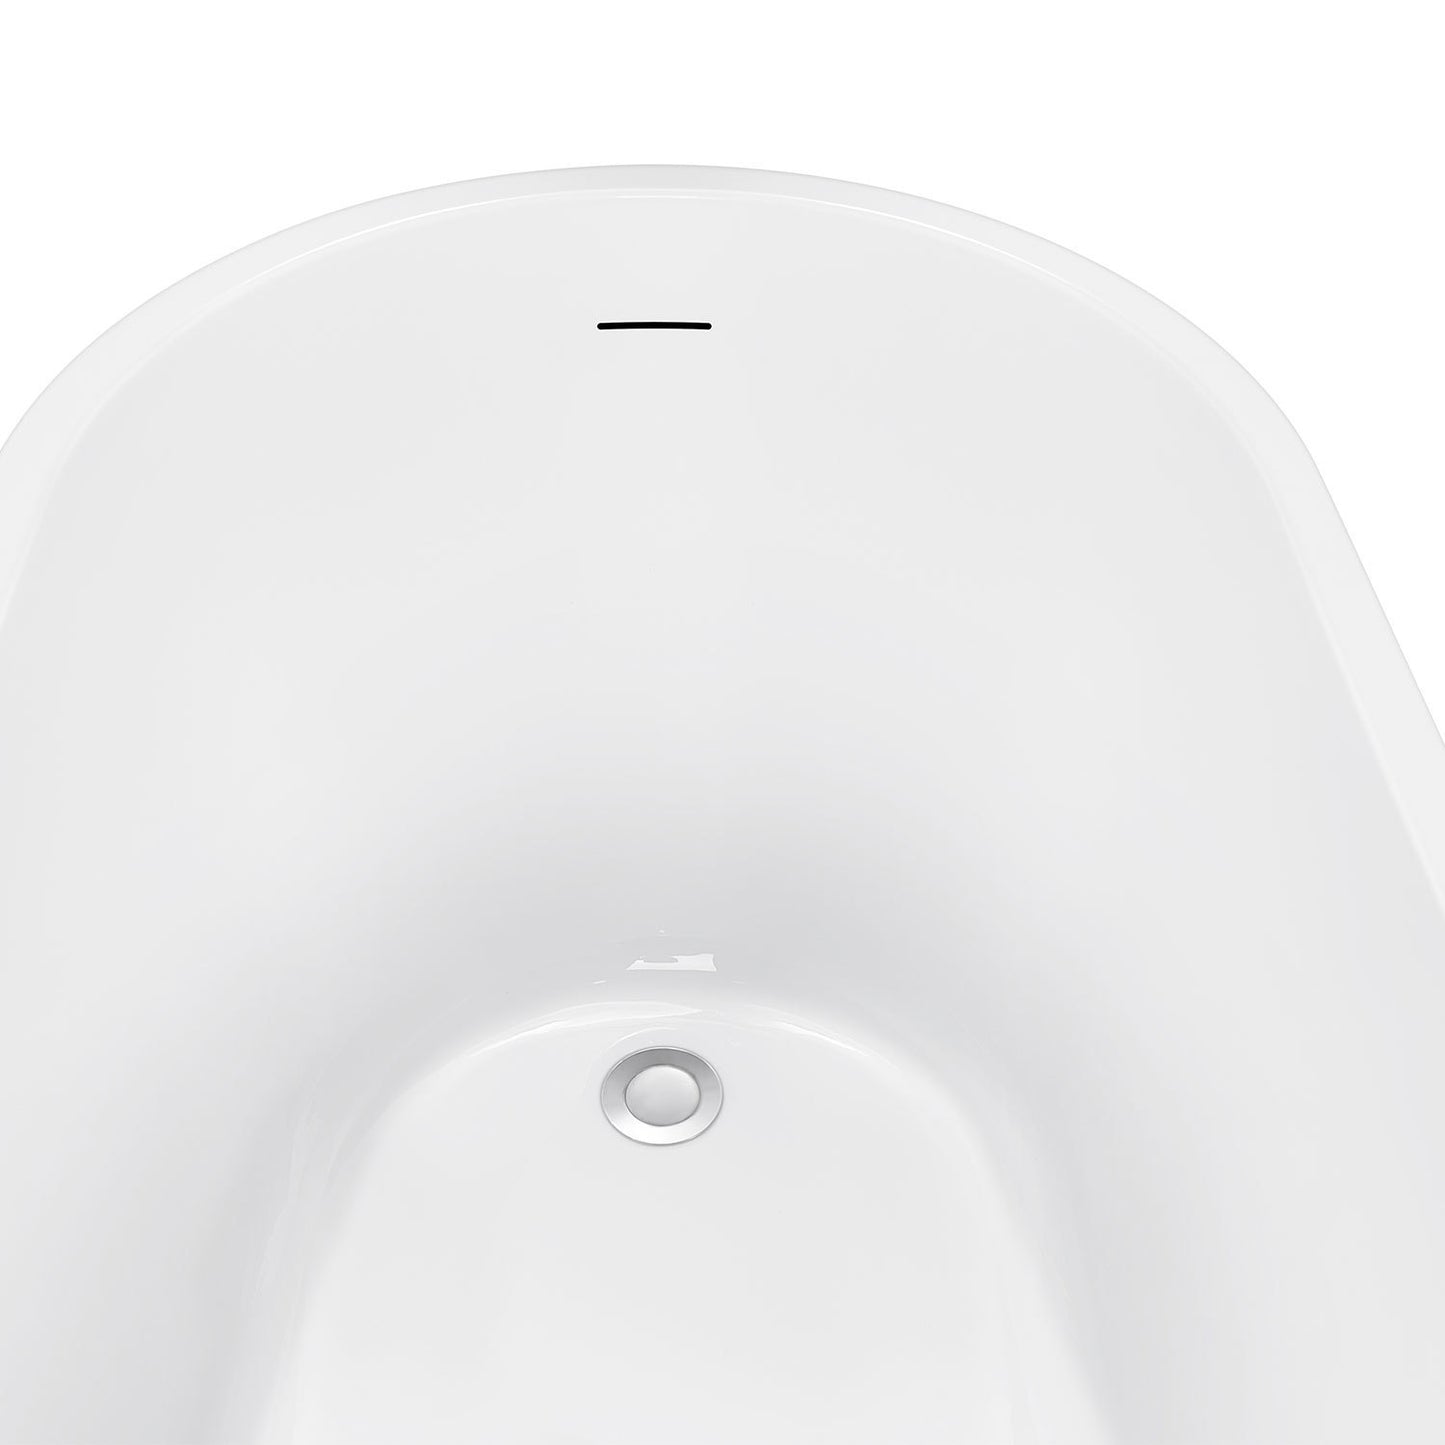 59" 100% Acrylic Freestanding Bathtub，Contemporary Soaking Tub，white Bathtub